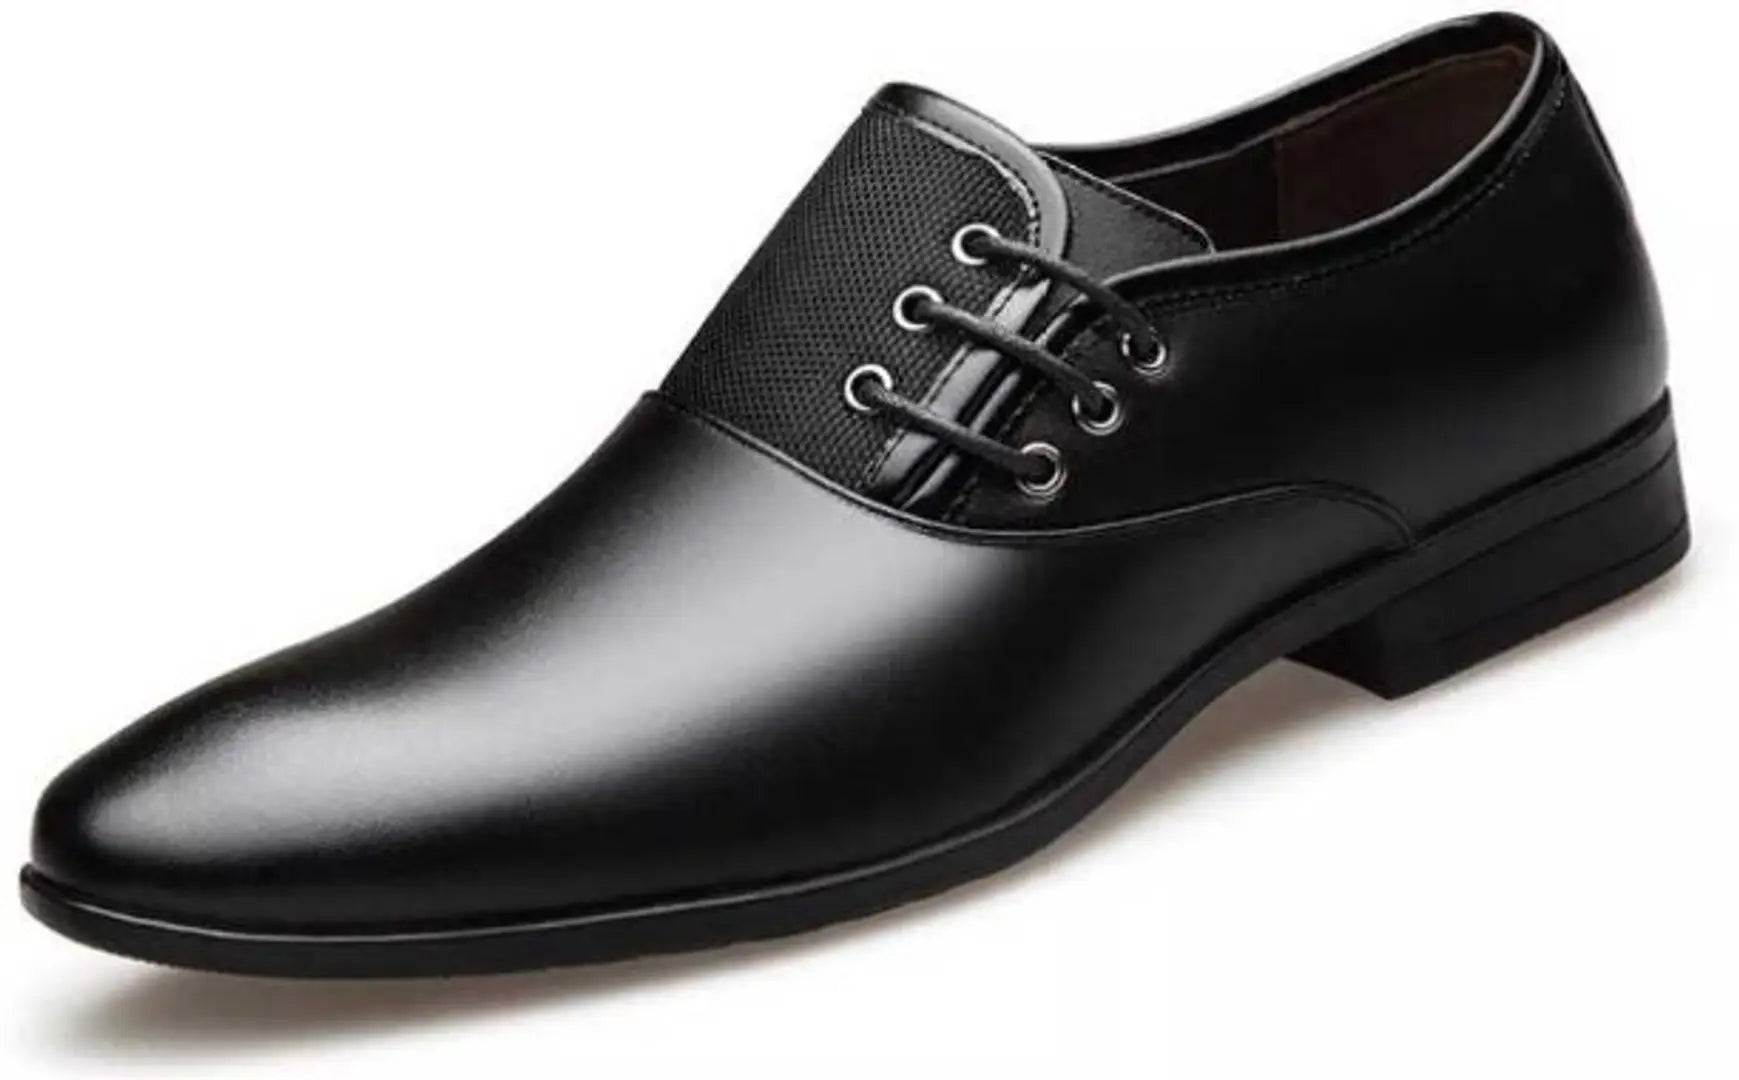 Black Shoes, Formal Shoes, Official Shoes for Men